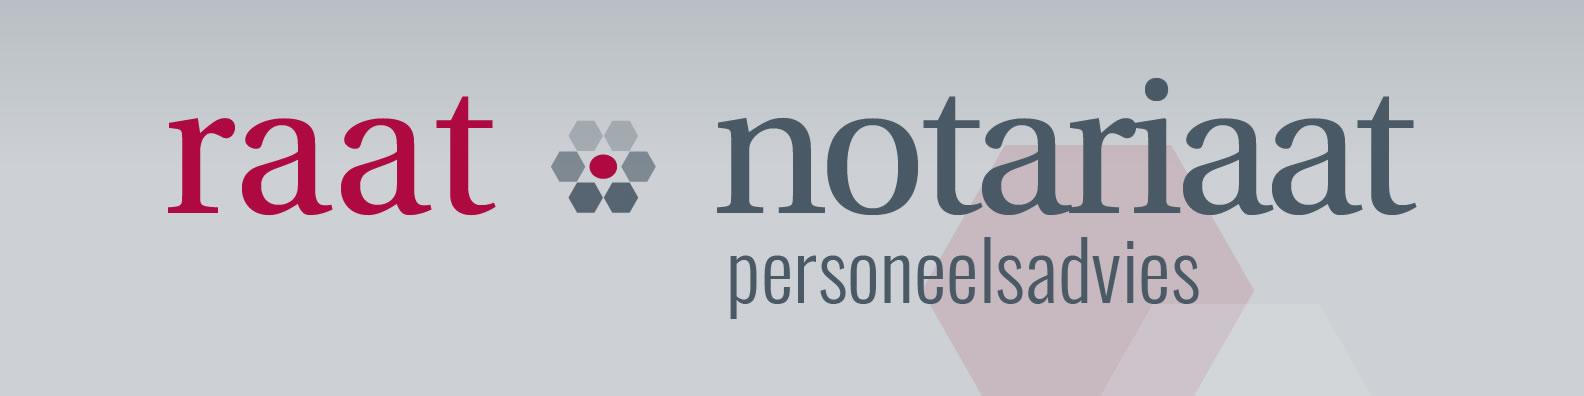 Kandidaat- notaris (60-100%)